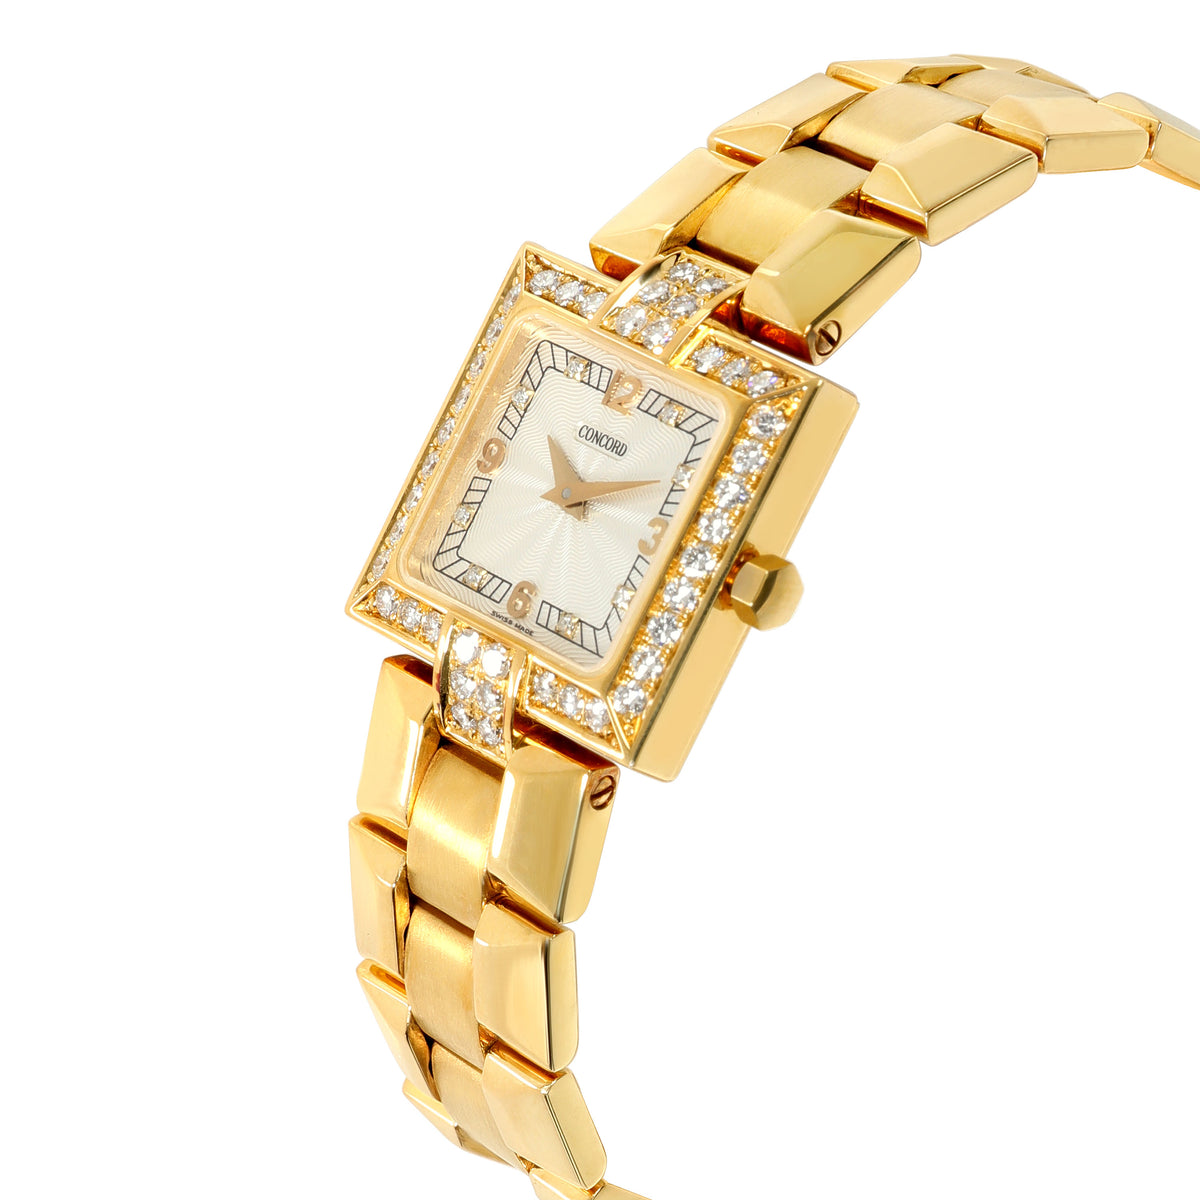 Concord La Scala 0308158  51-25-572 Women's Watch in 18kt Yellow Gold